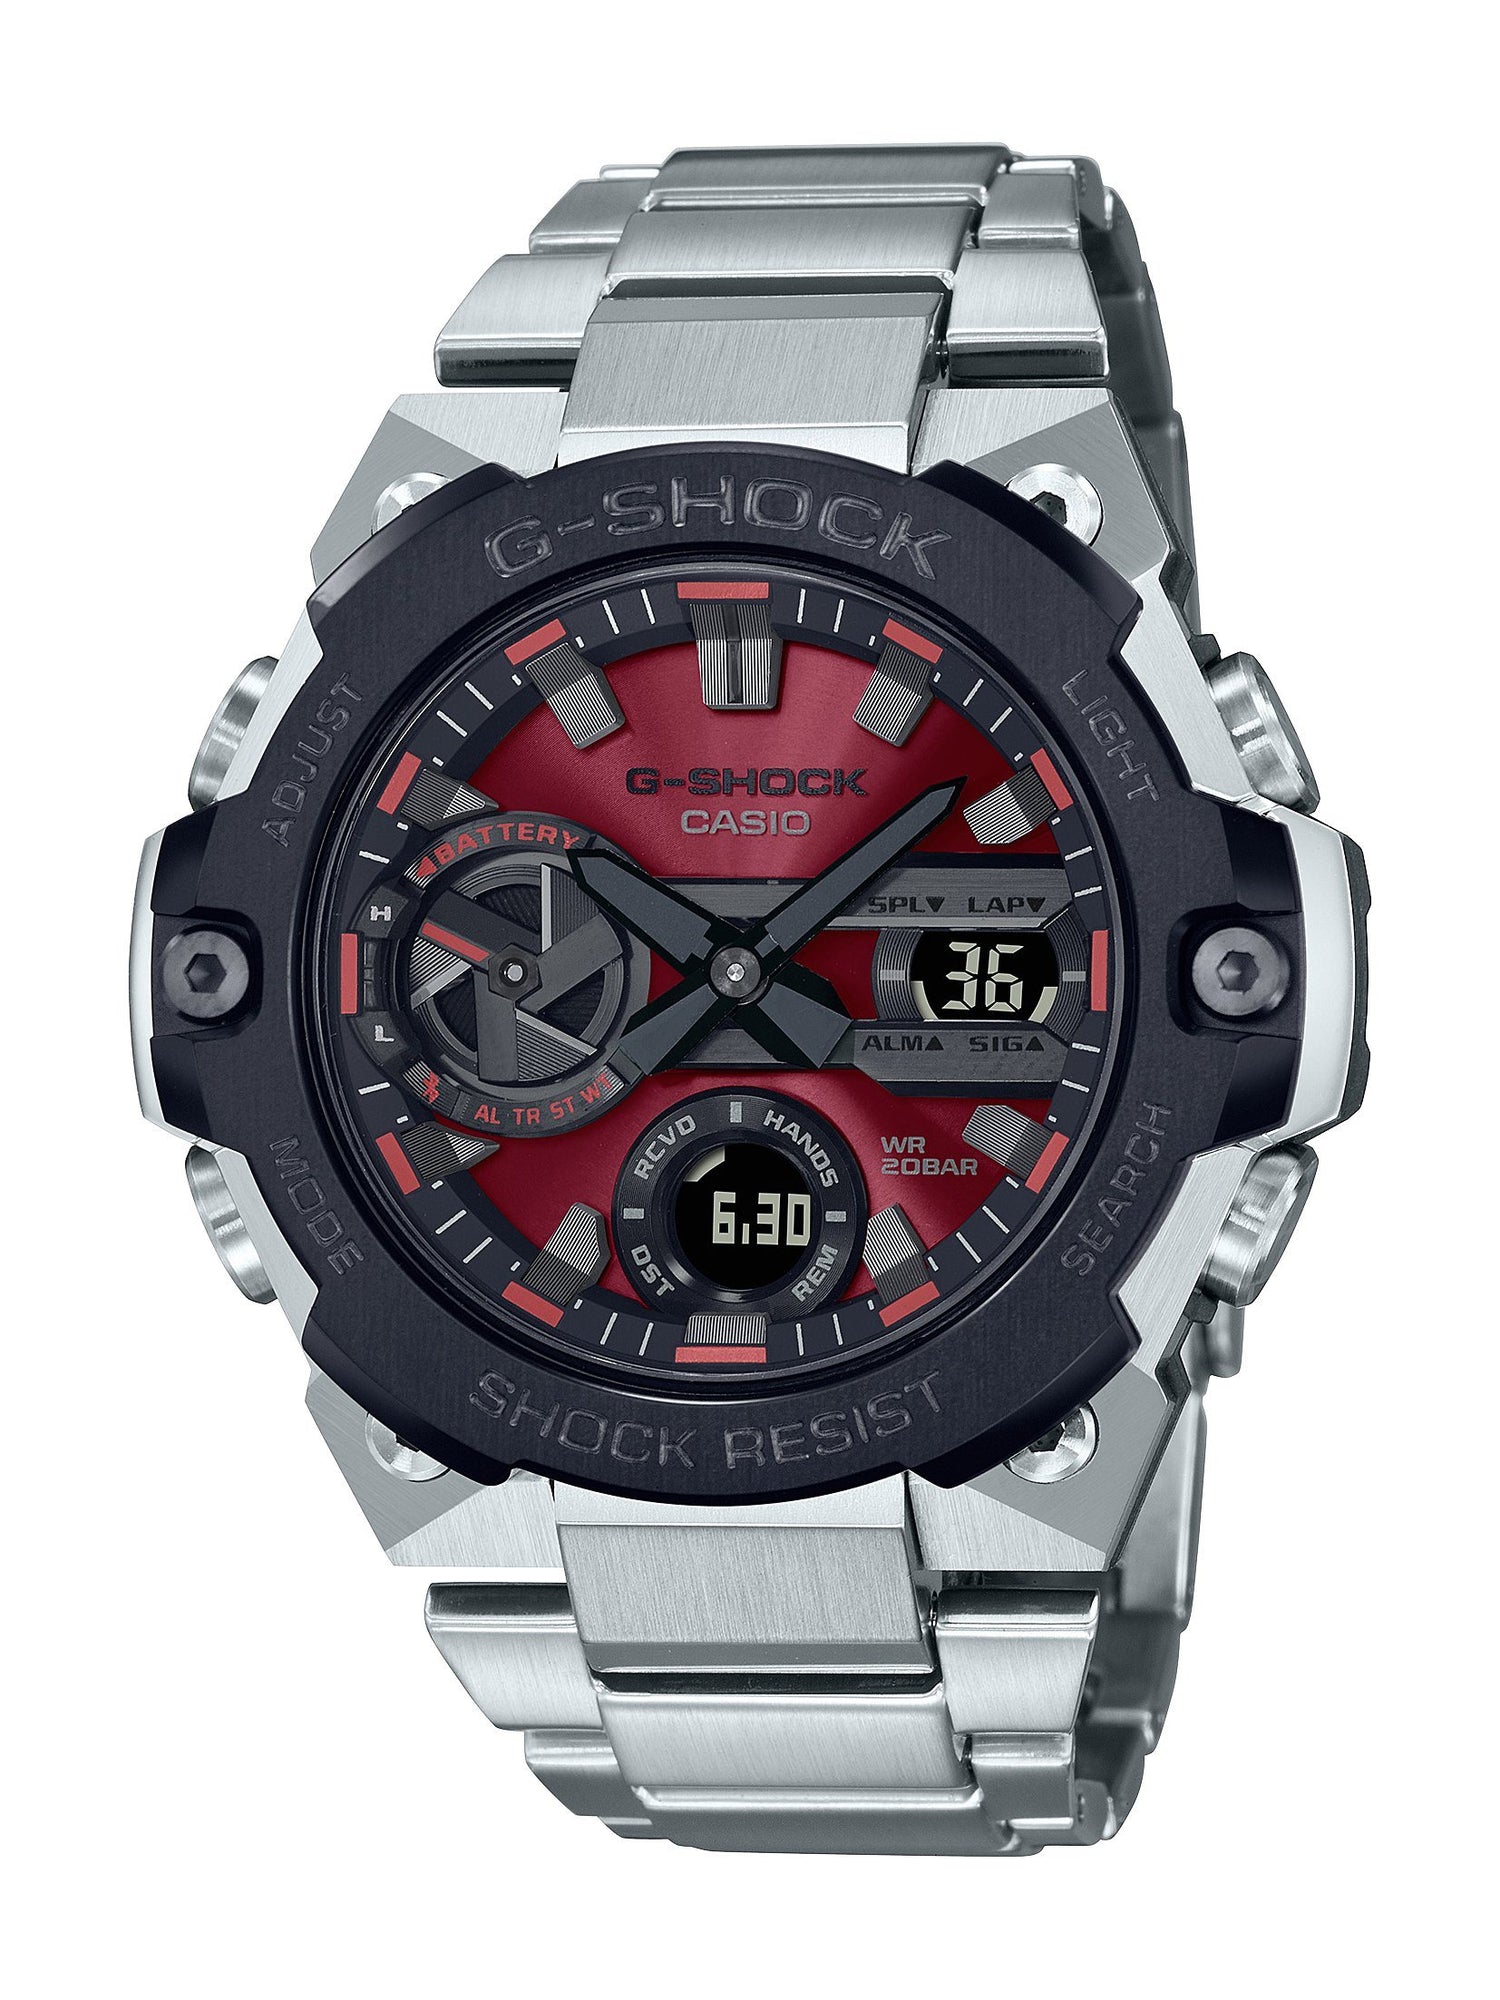 Casio G Shock G Steel Black and Silver Watch GST-B400AD-1A4DR Watches Casio 